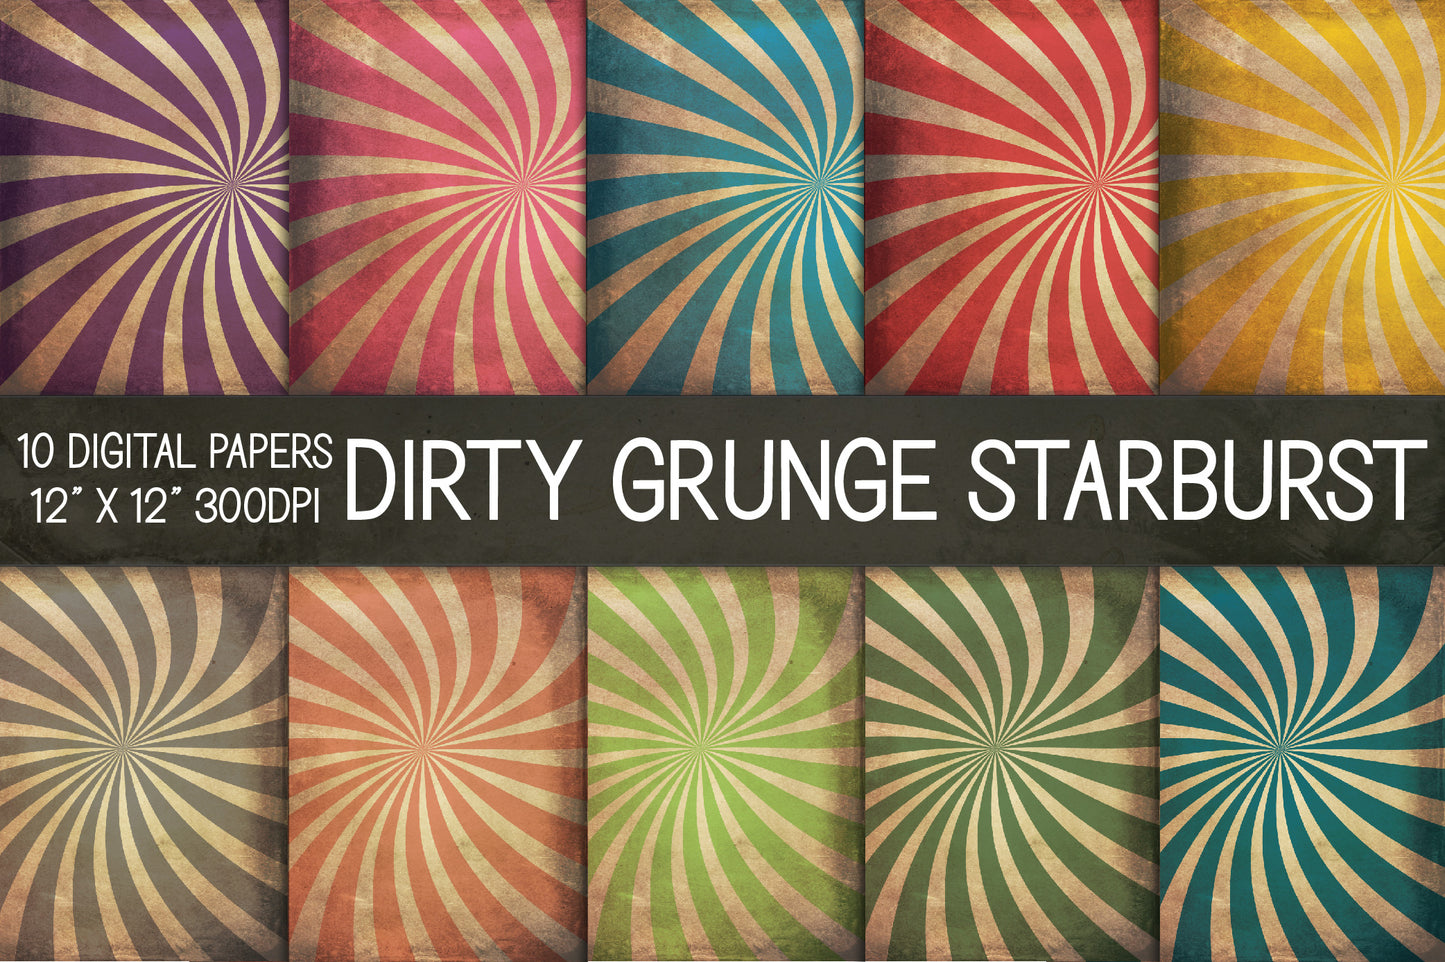 Dirty Grunge Starburst Digital Papers, Grunge Texture Paper